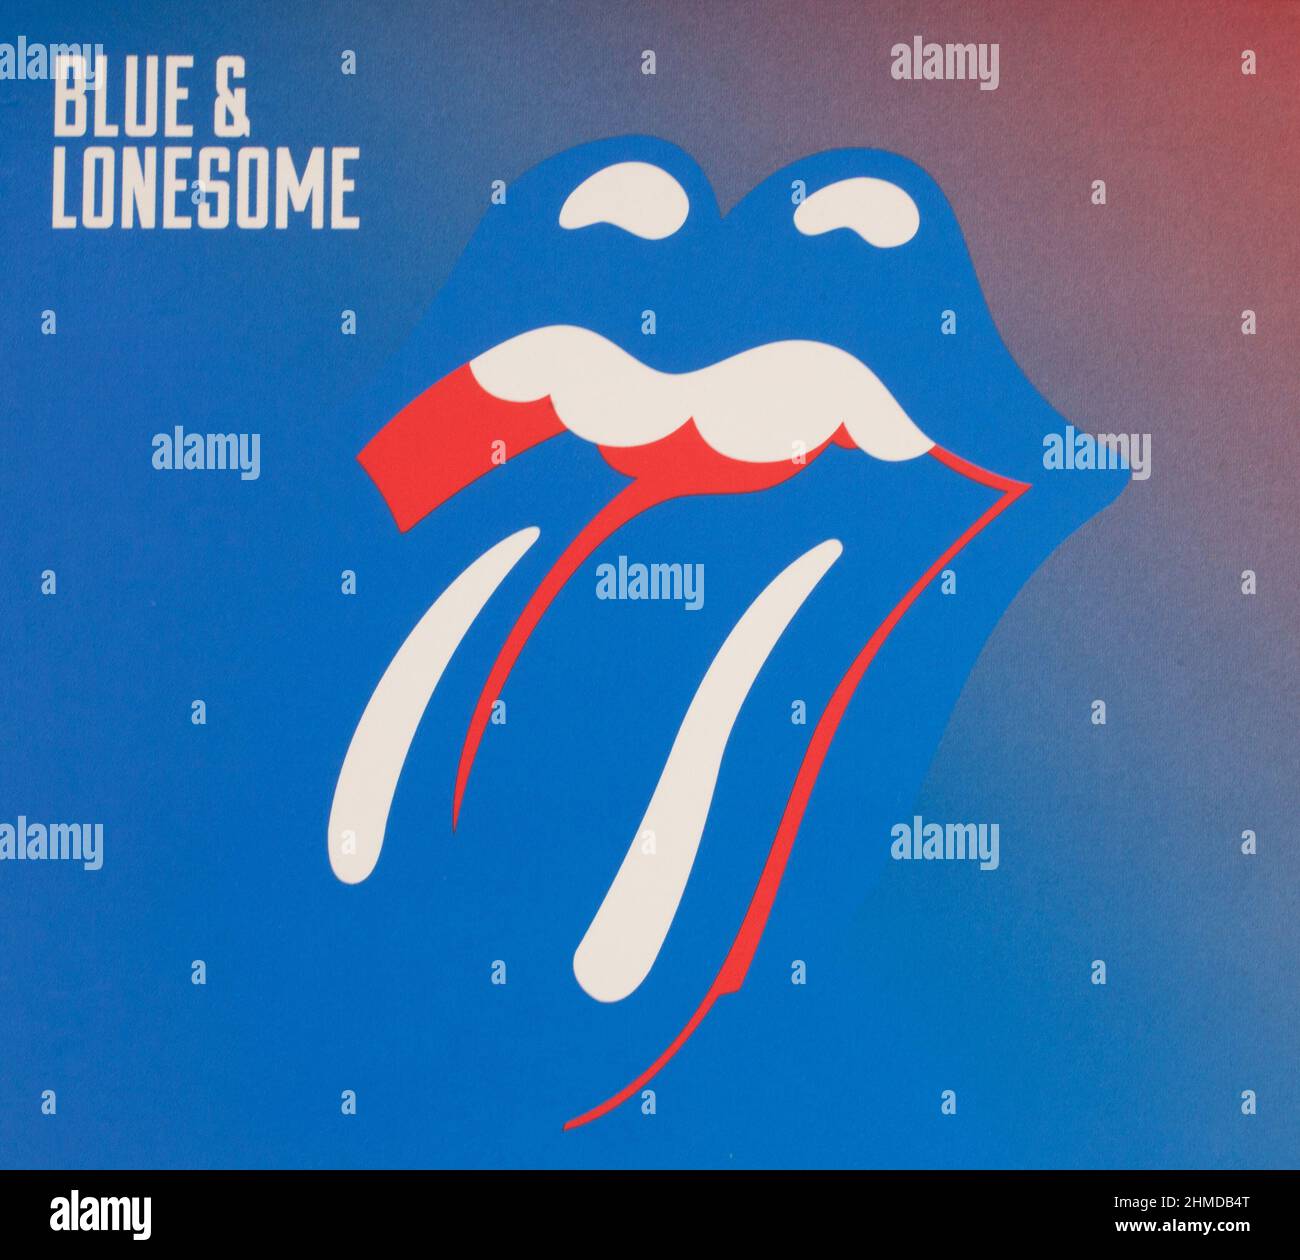 El álbum de cd Cover, Blues and Lonesome de The Rolling Stones Foto de stock